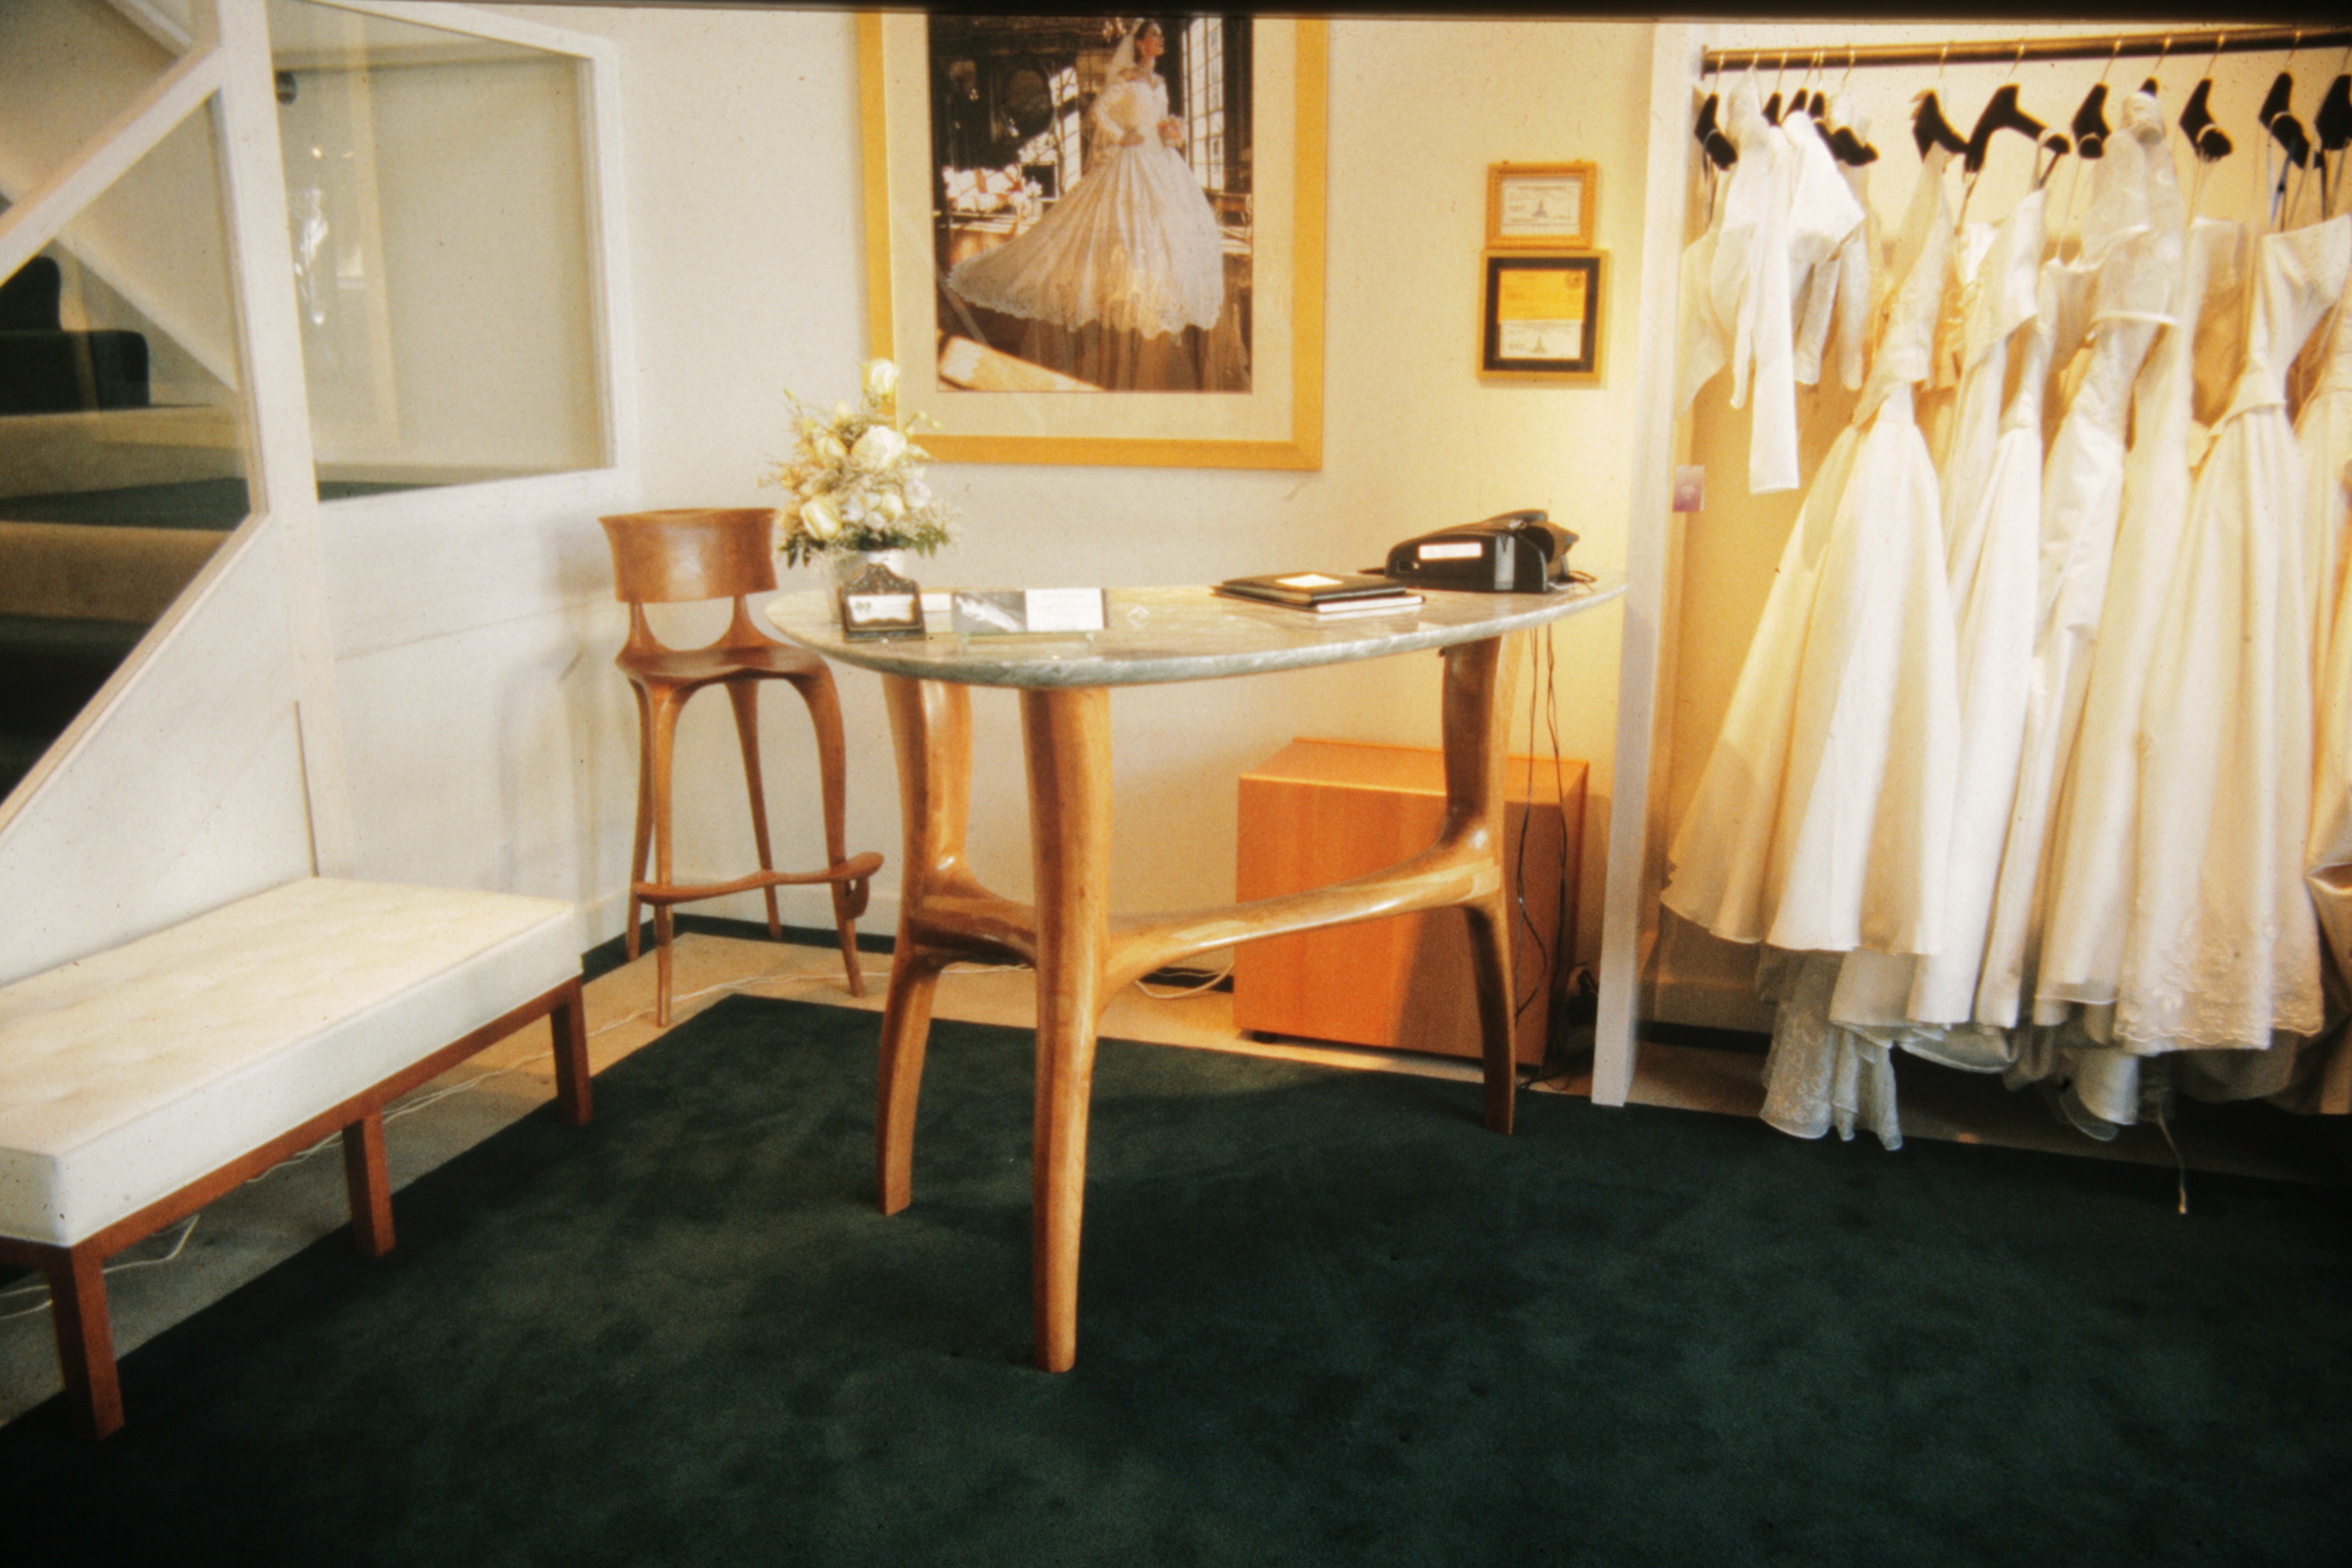 Bridal-shop-table